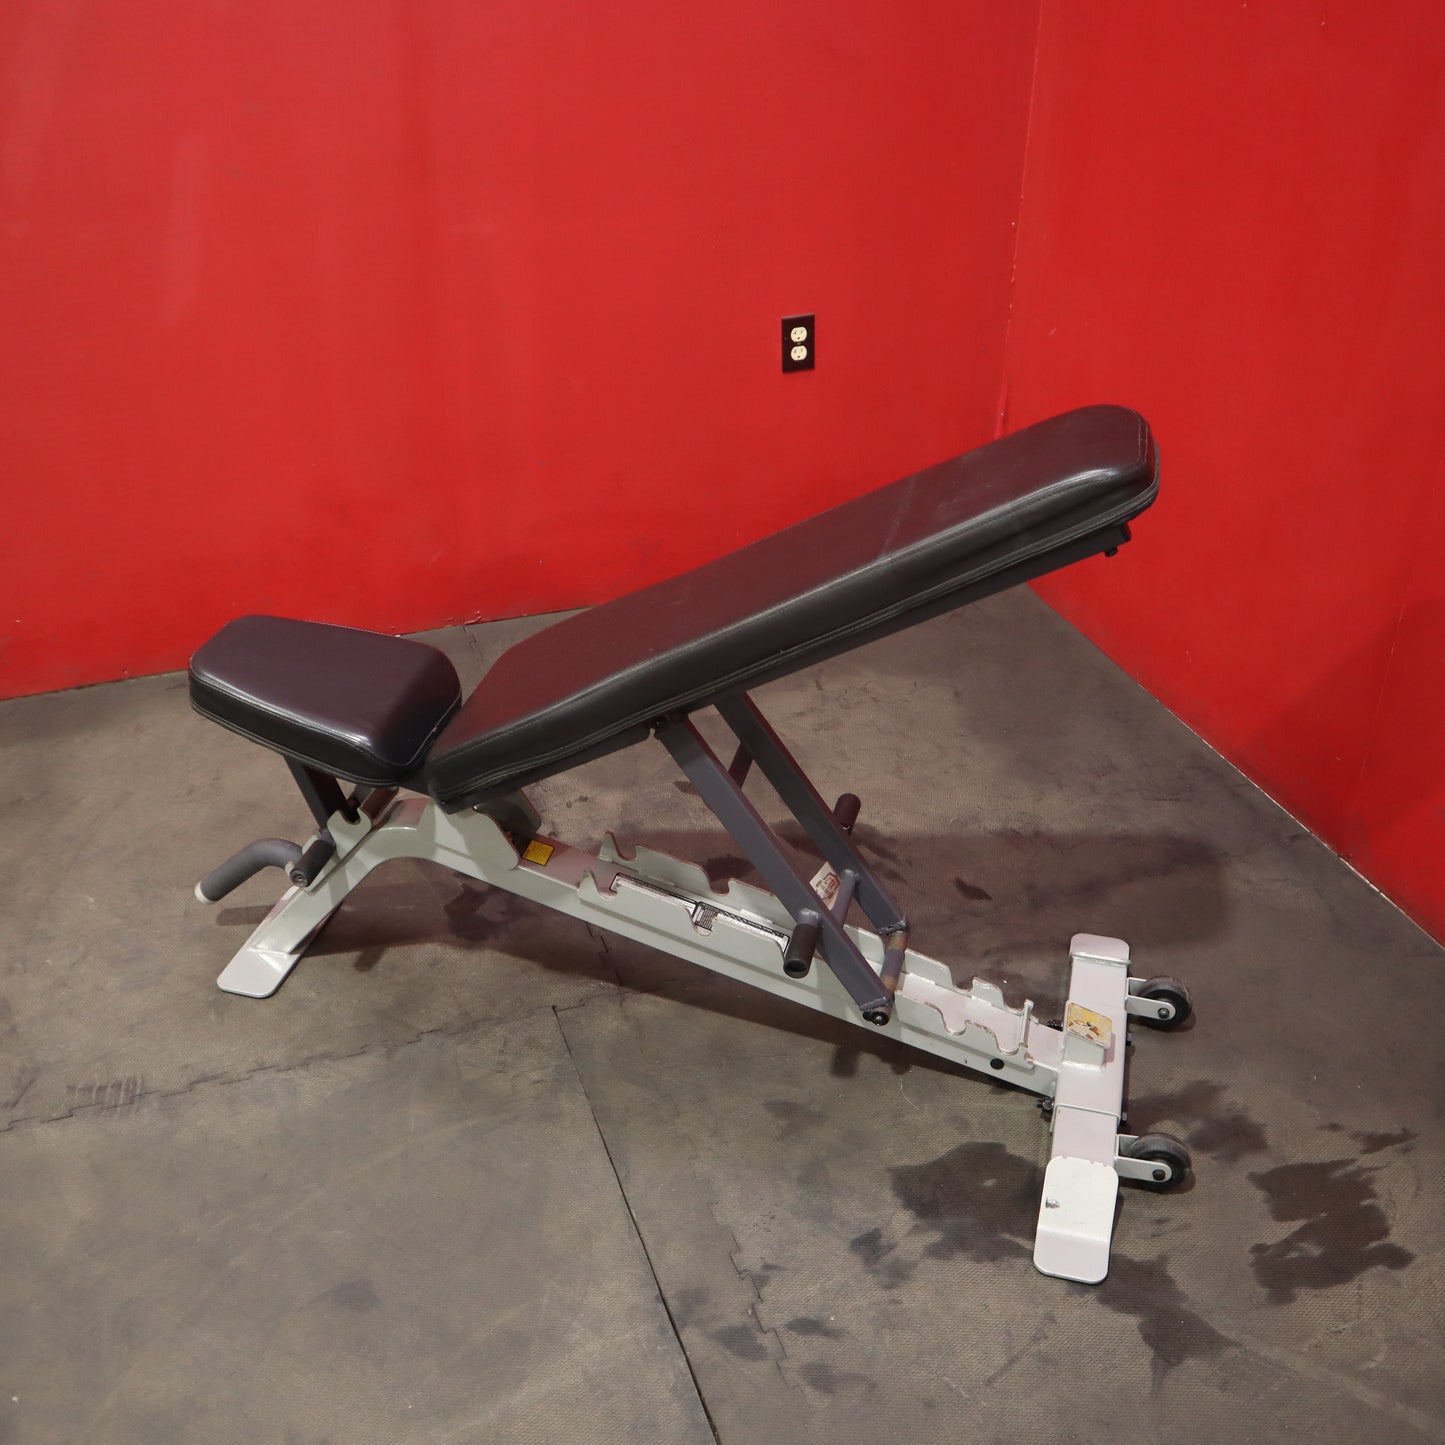 Body Solid Multi Adjust Bench (Usado)